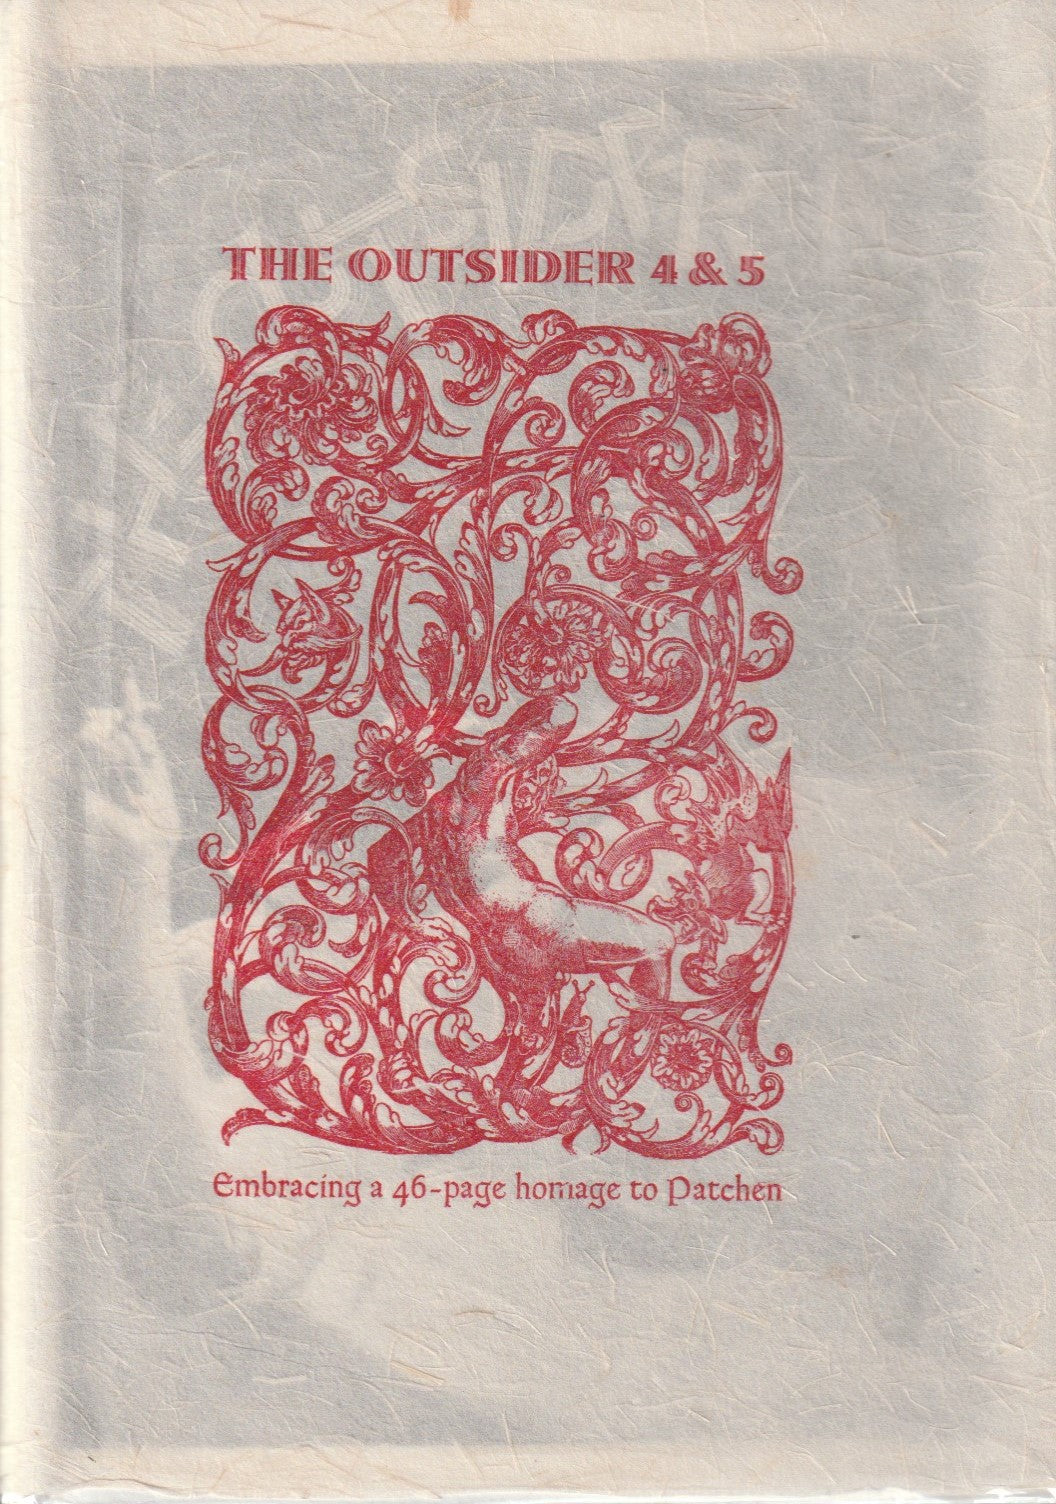 The Outsider 4/5 -- Pristine Hardcover Copy (1/500) with Ephemera